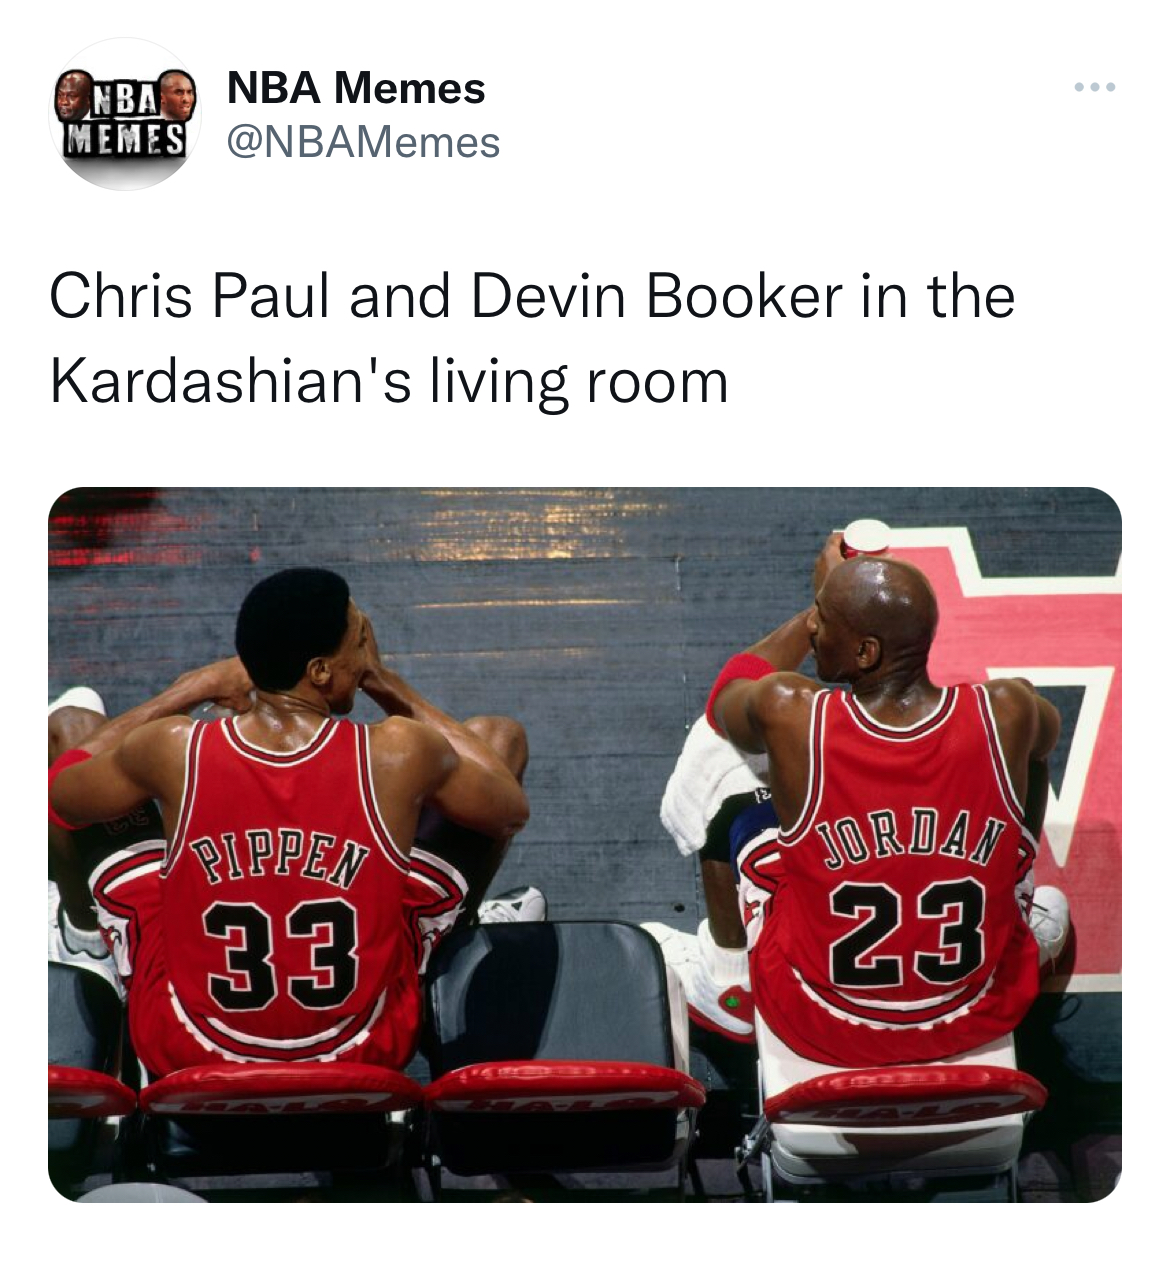 Chris Paul and Kim K memes - jordan and pippen twitter - Nba Nba Memes Memes Chris Paul and Devin Booker in the Kardashian's living room Pippen 33 Jordan 23